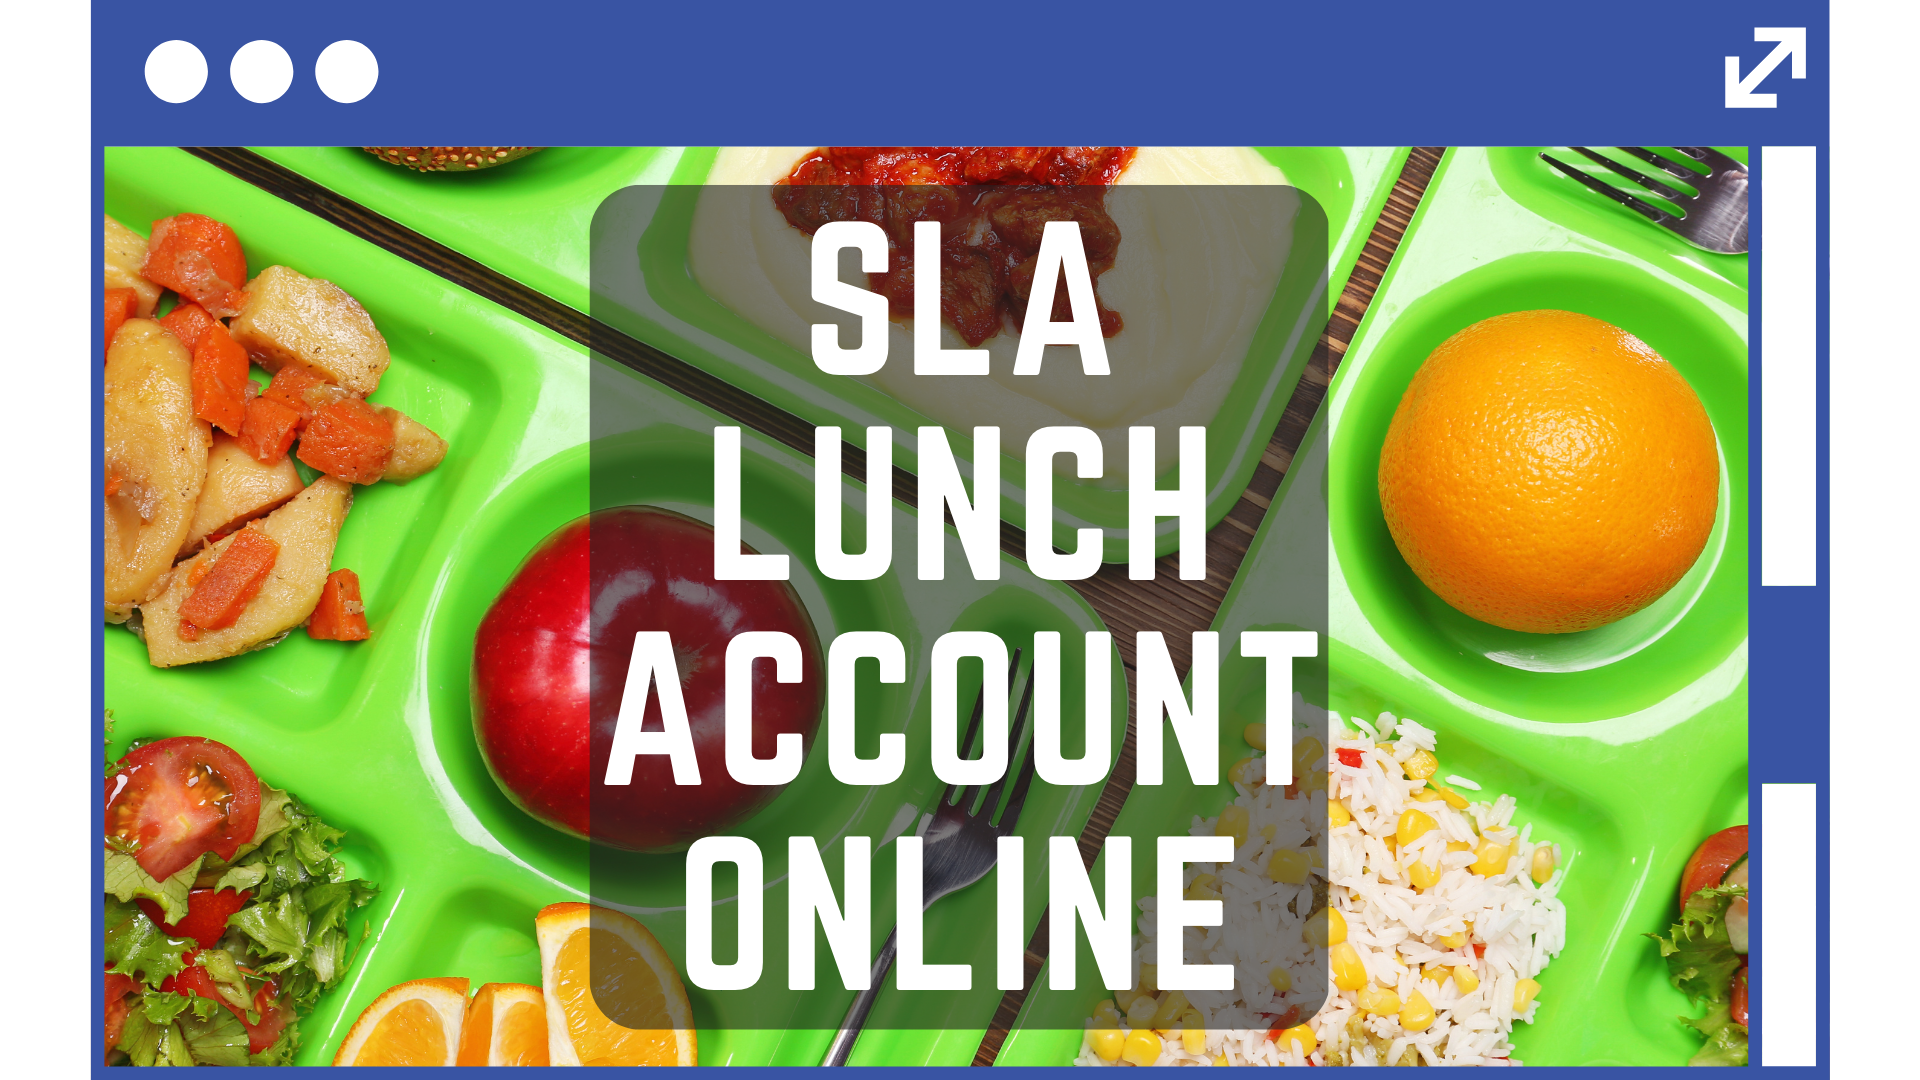 SLA Lunch Account Online